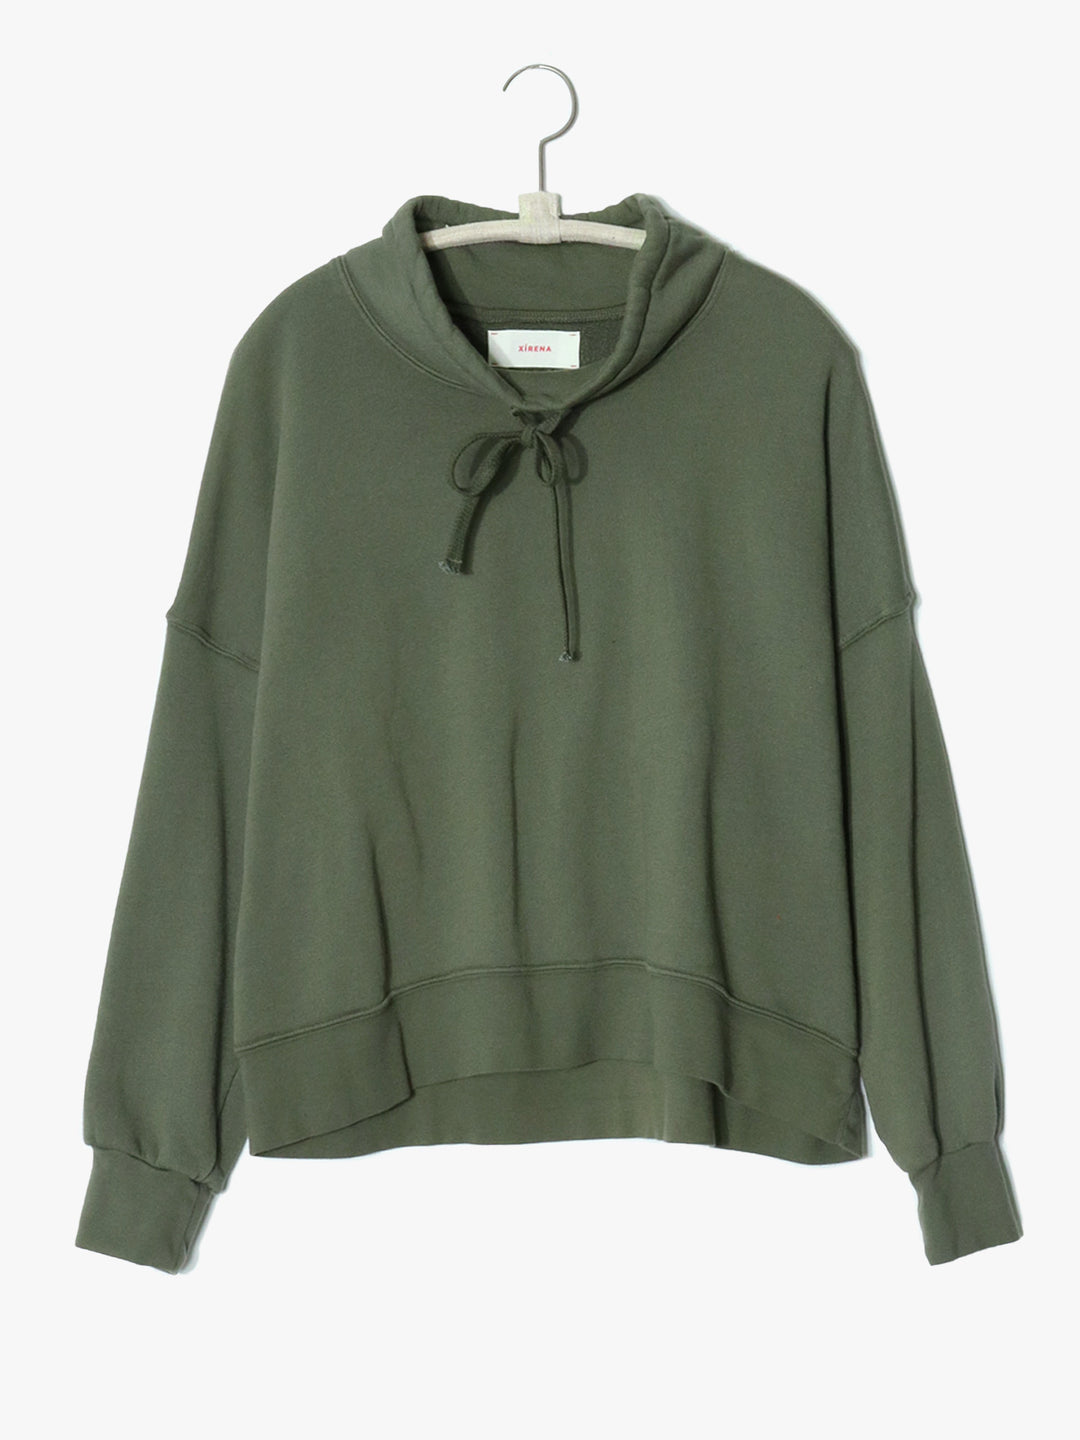 Xirena - Chase Sweatshirt in Army Green